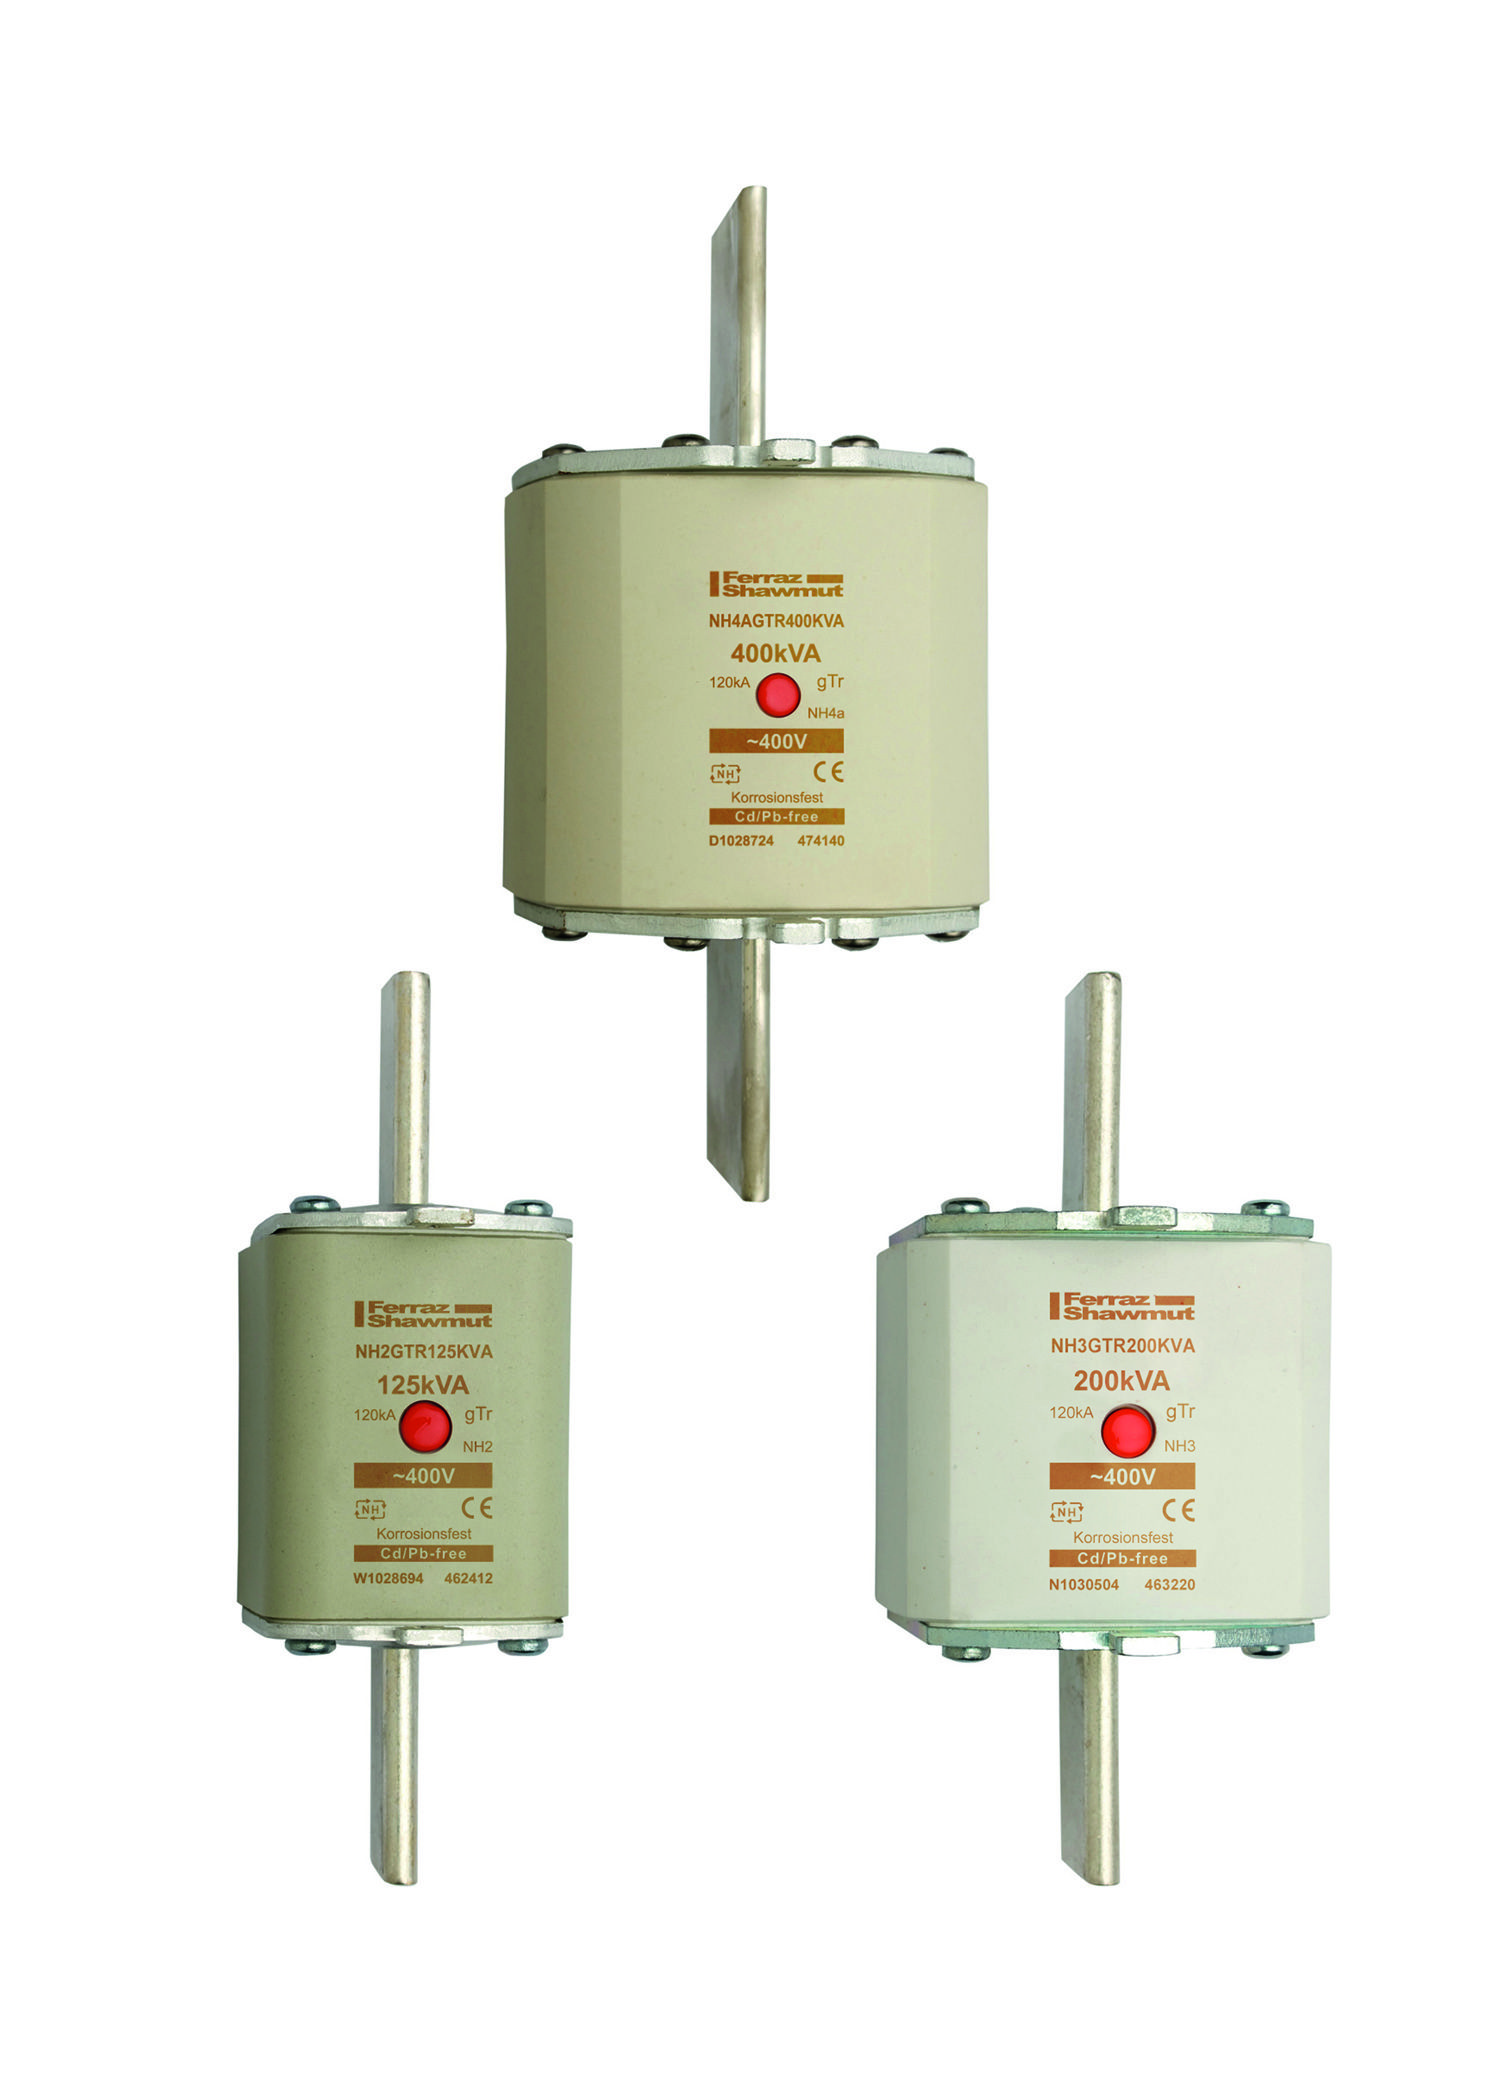 G1030498 - NH fuse-link gTr, 400VAC, size 2, 200KVA, centre indicator/live tags